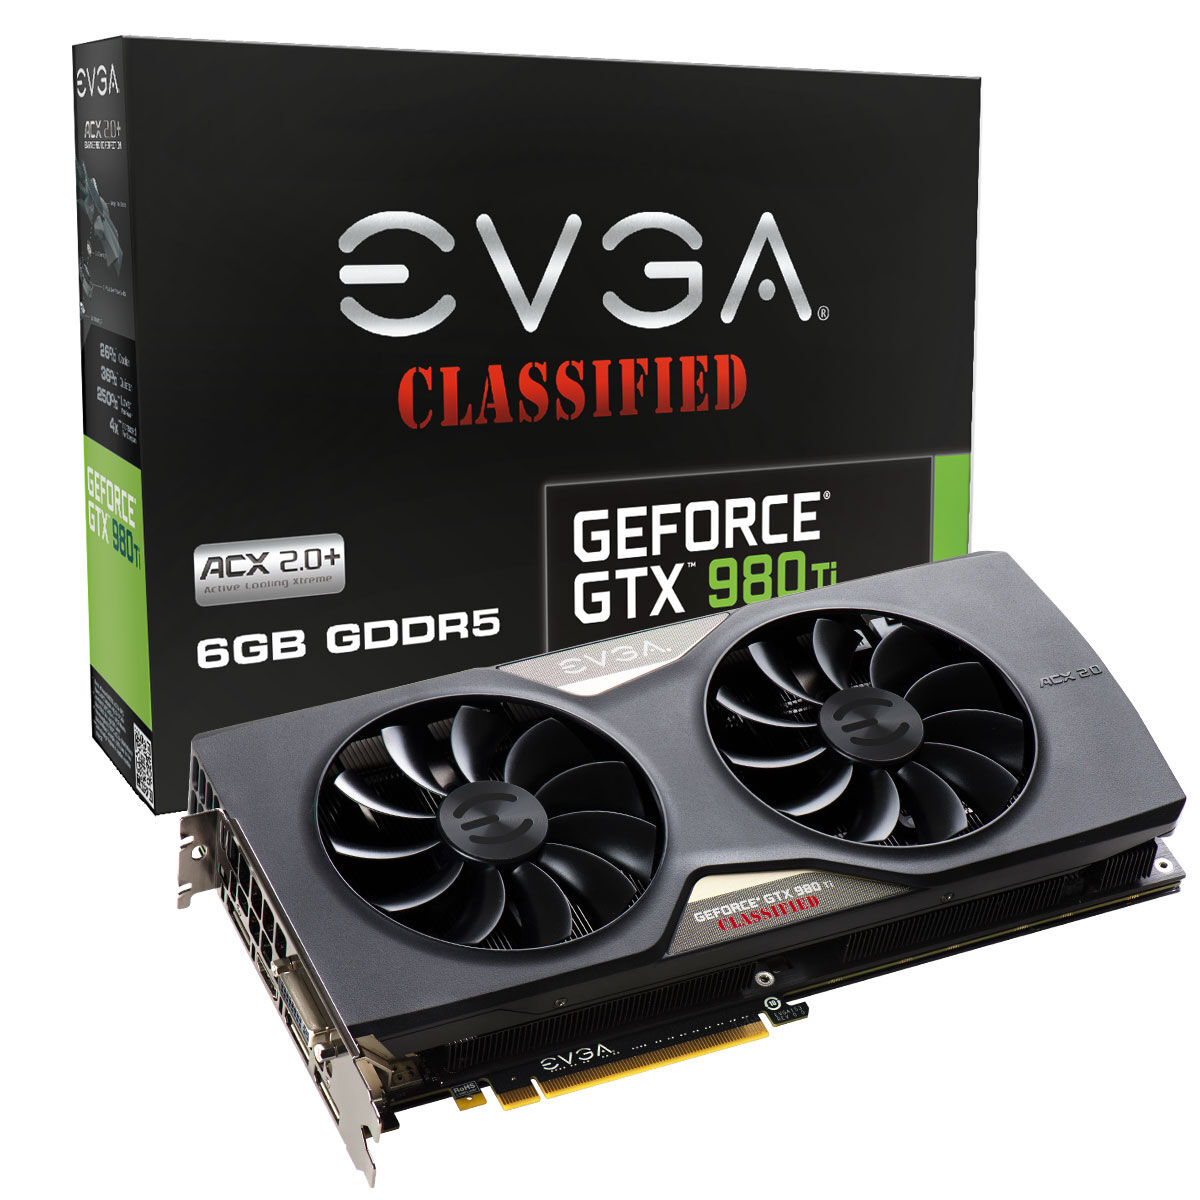 EVGA GeForce GTX 980 Ti Classified ACX 2.0+ announced 28